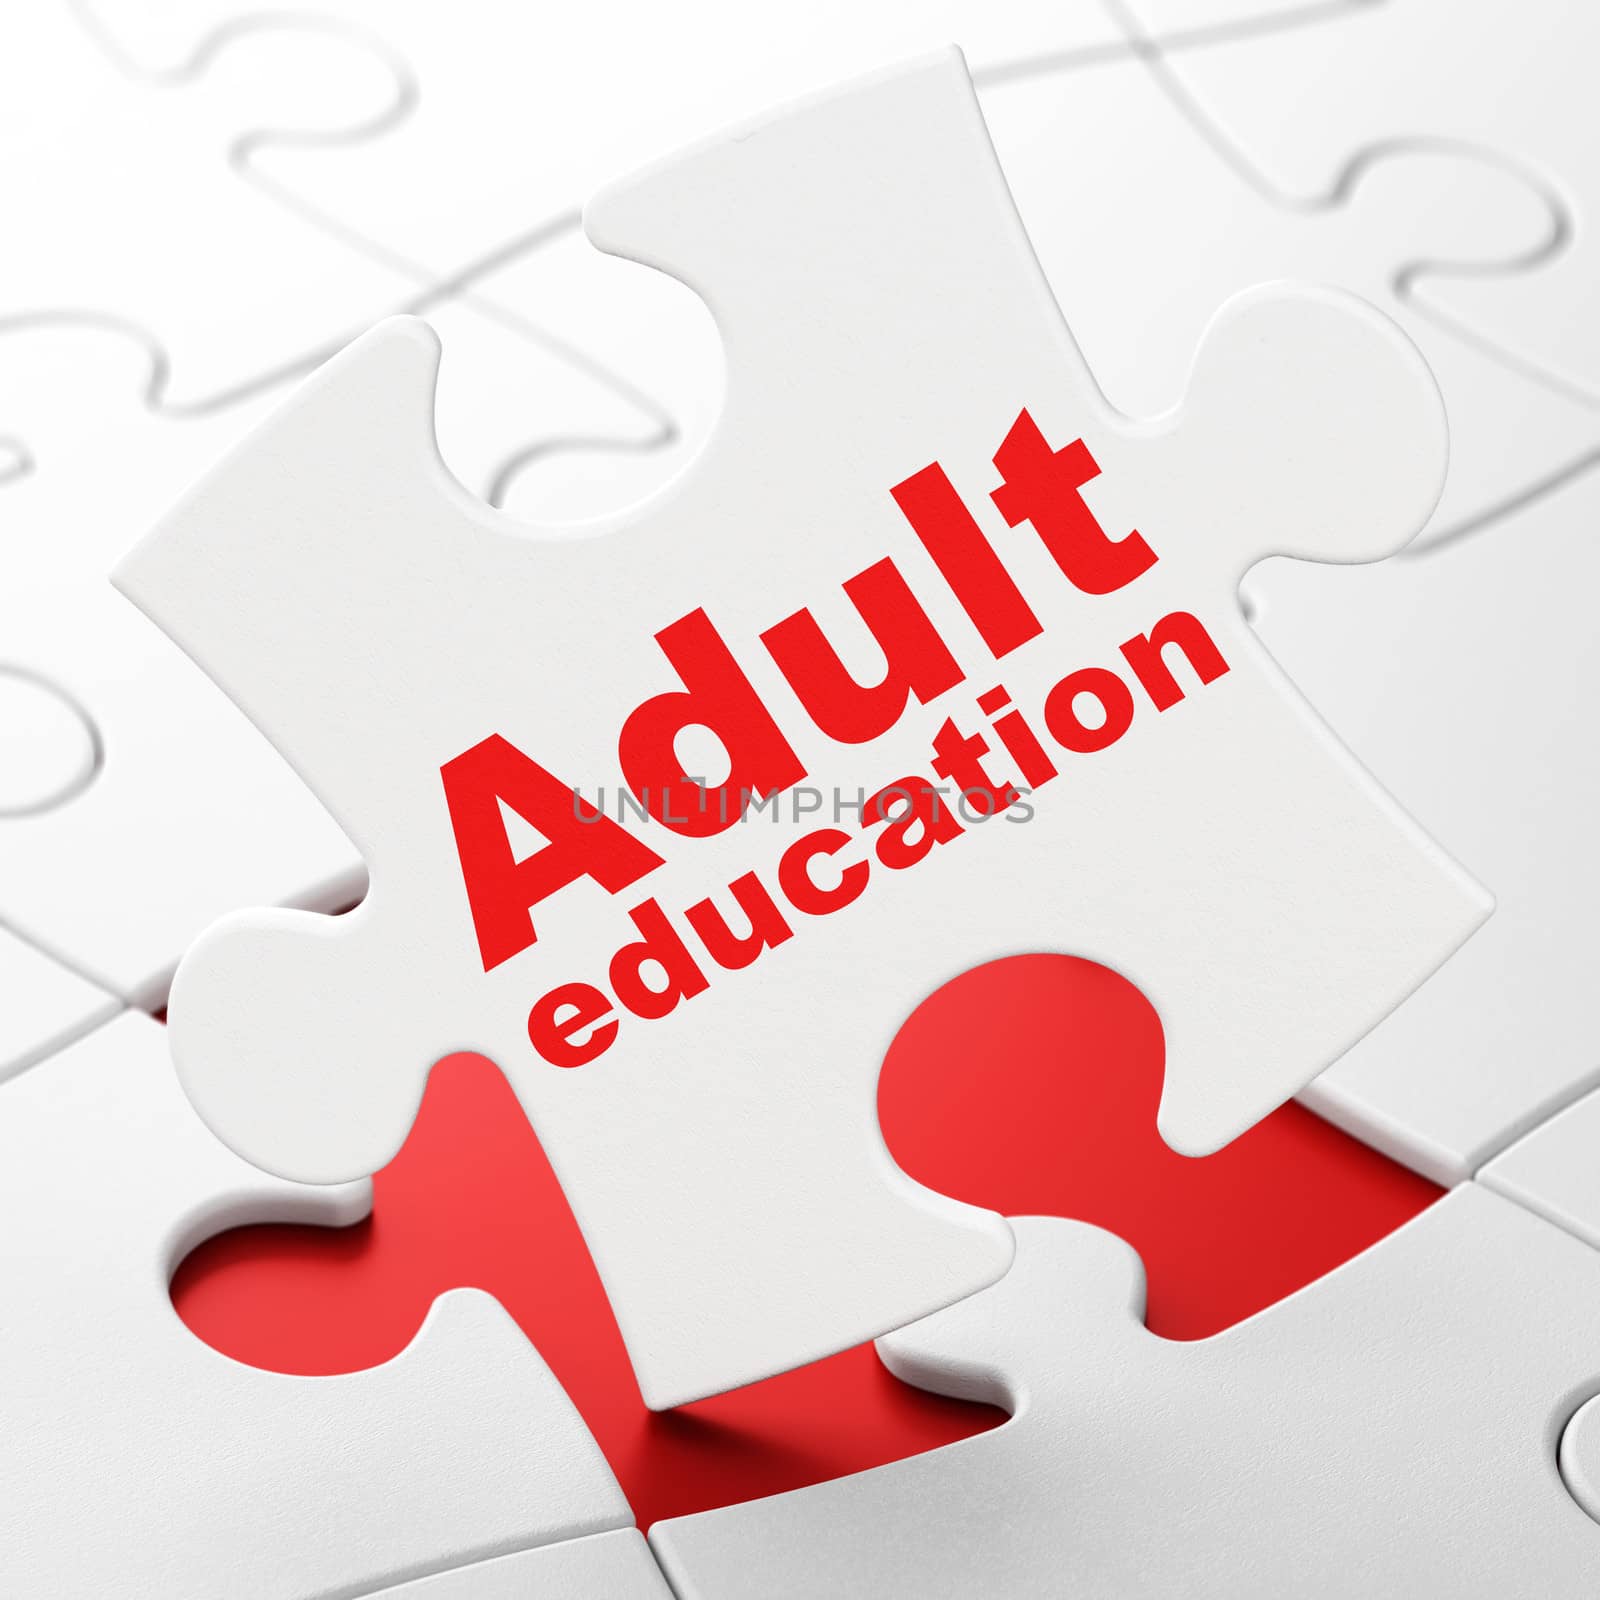 Education concept: Adult Education on White puzzle pieces background, 3d render